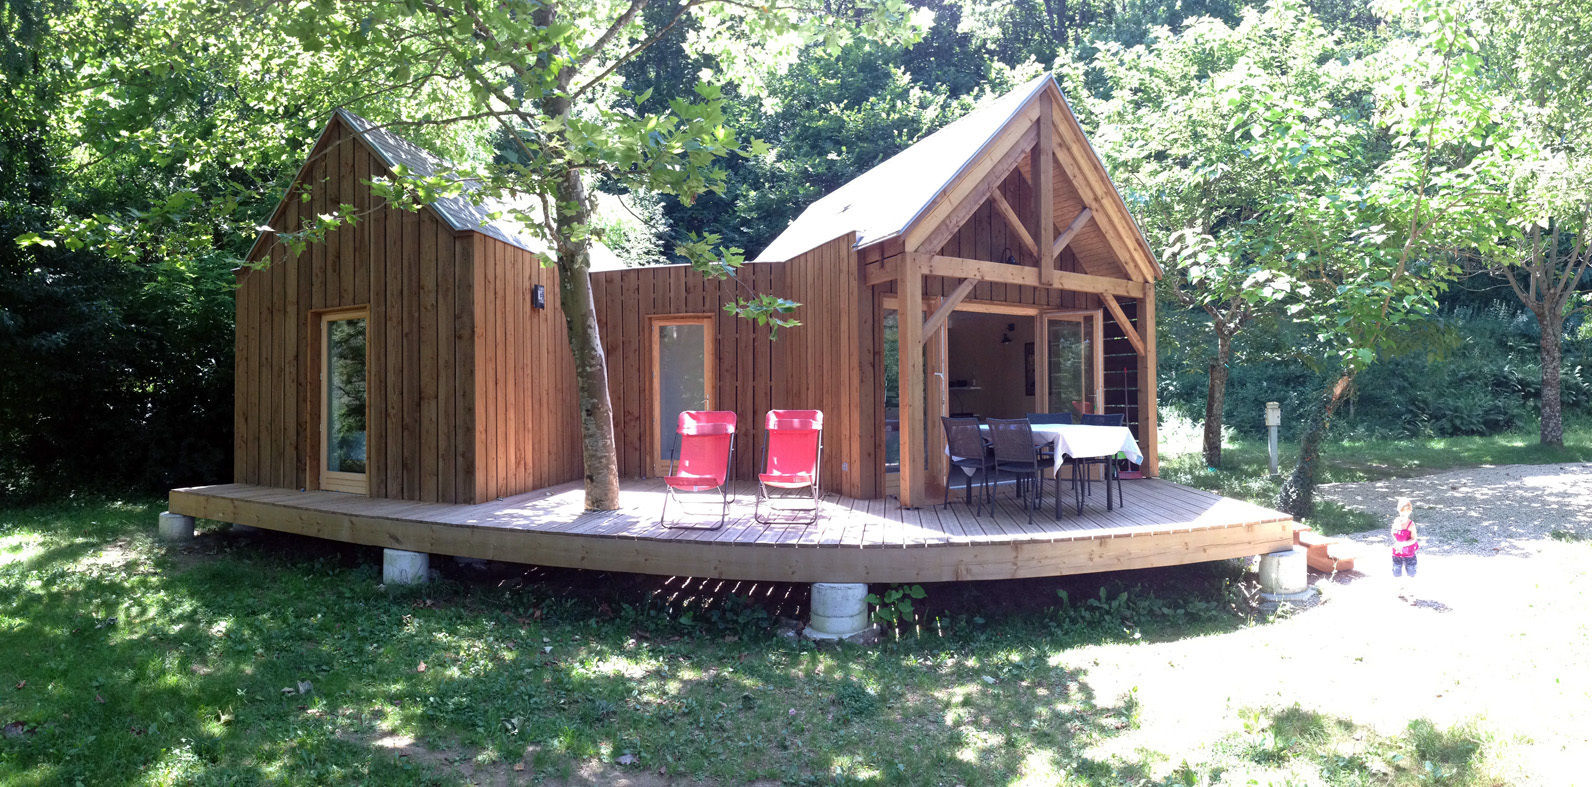 Habitat de loisir en bois - camping les Clots mirandol - bourgnounac, ...architectes ...architectes 商业空间 飯店